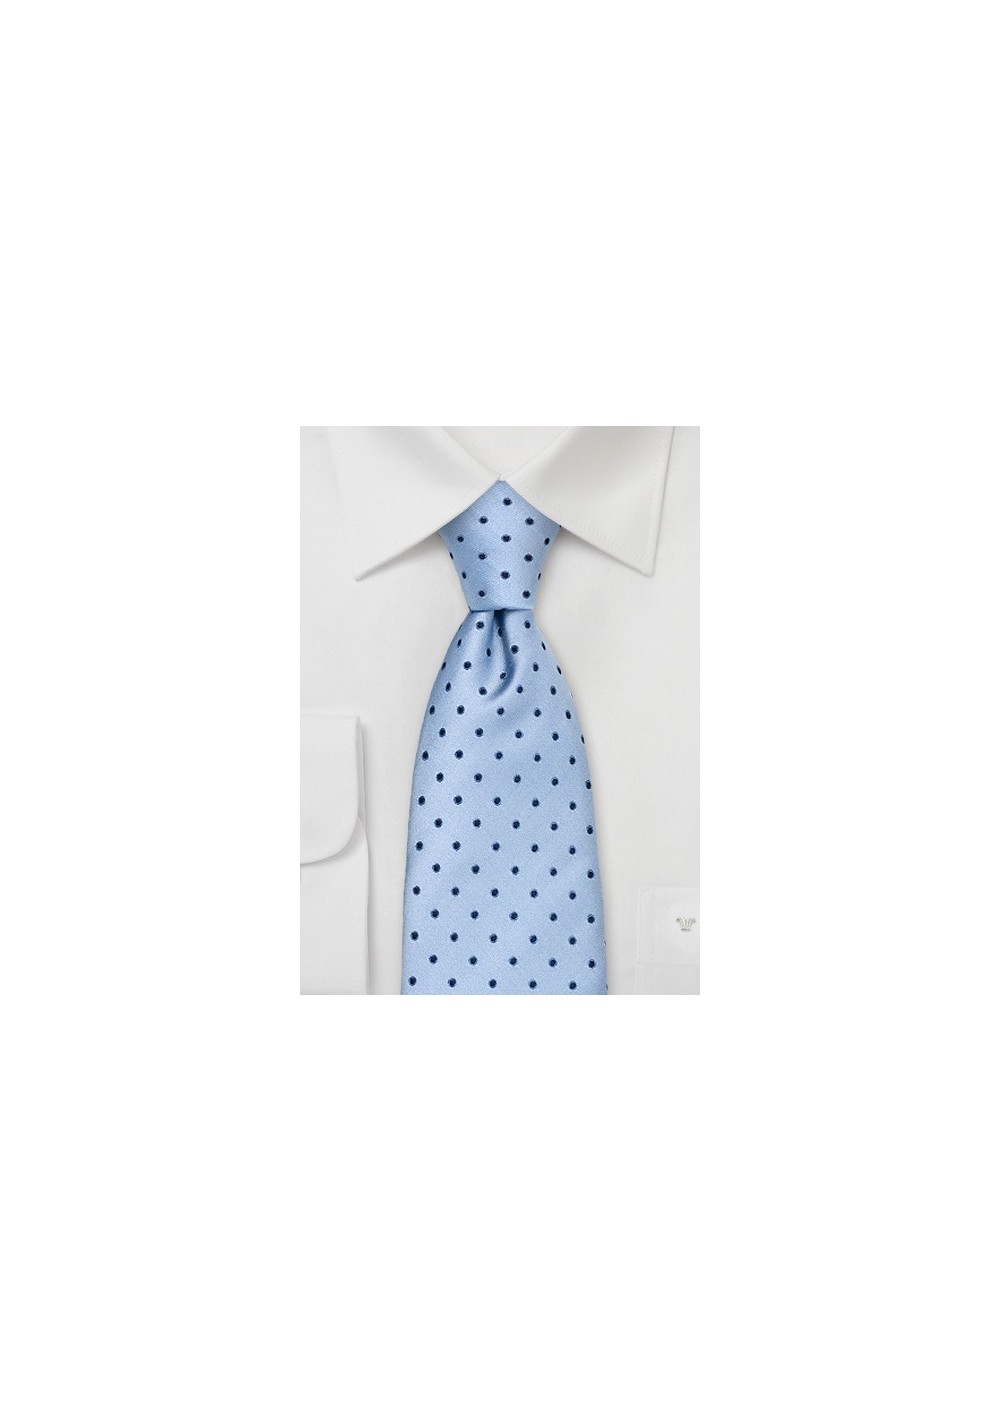 Light Blue Polka Dot Tie in XL Length